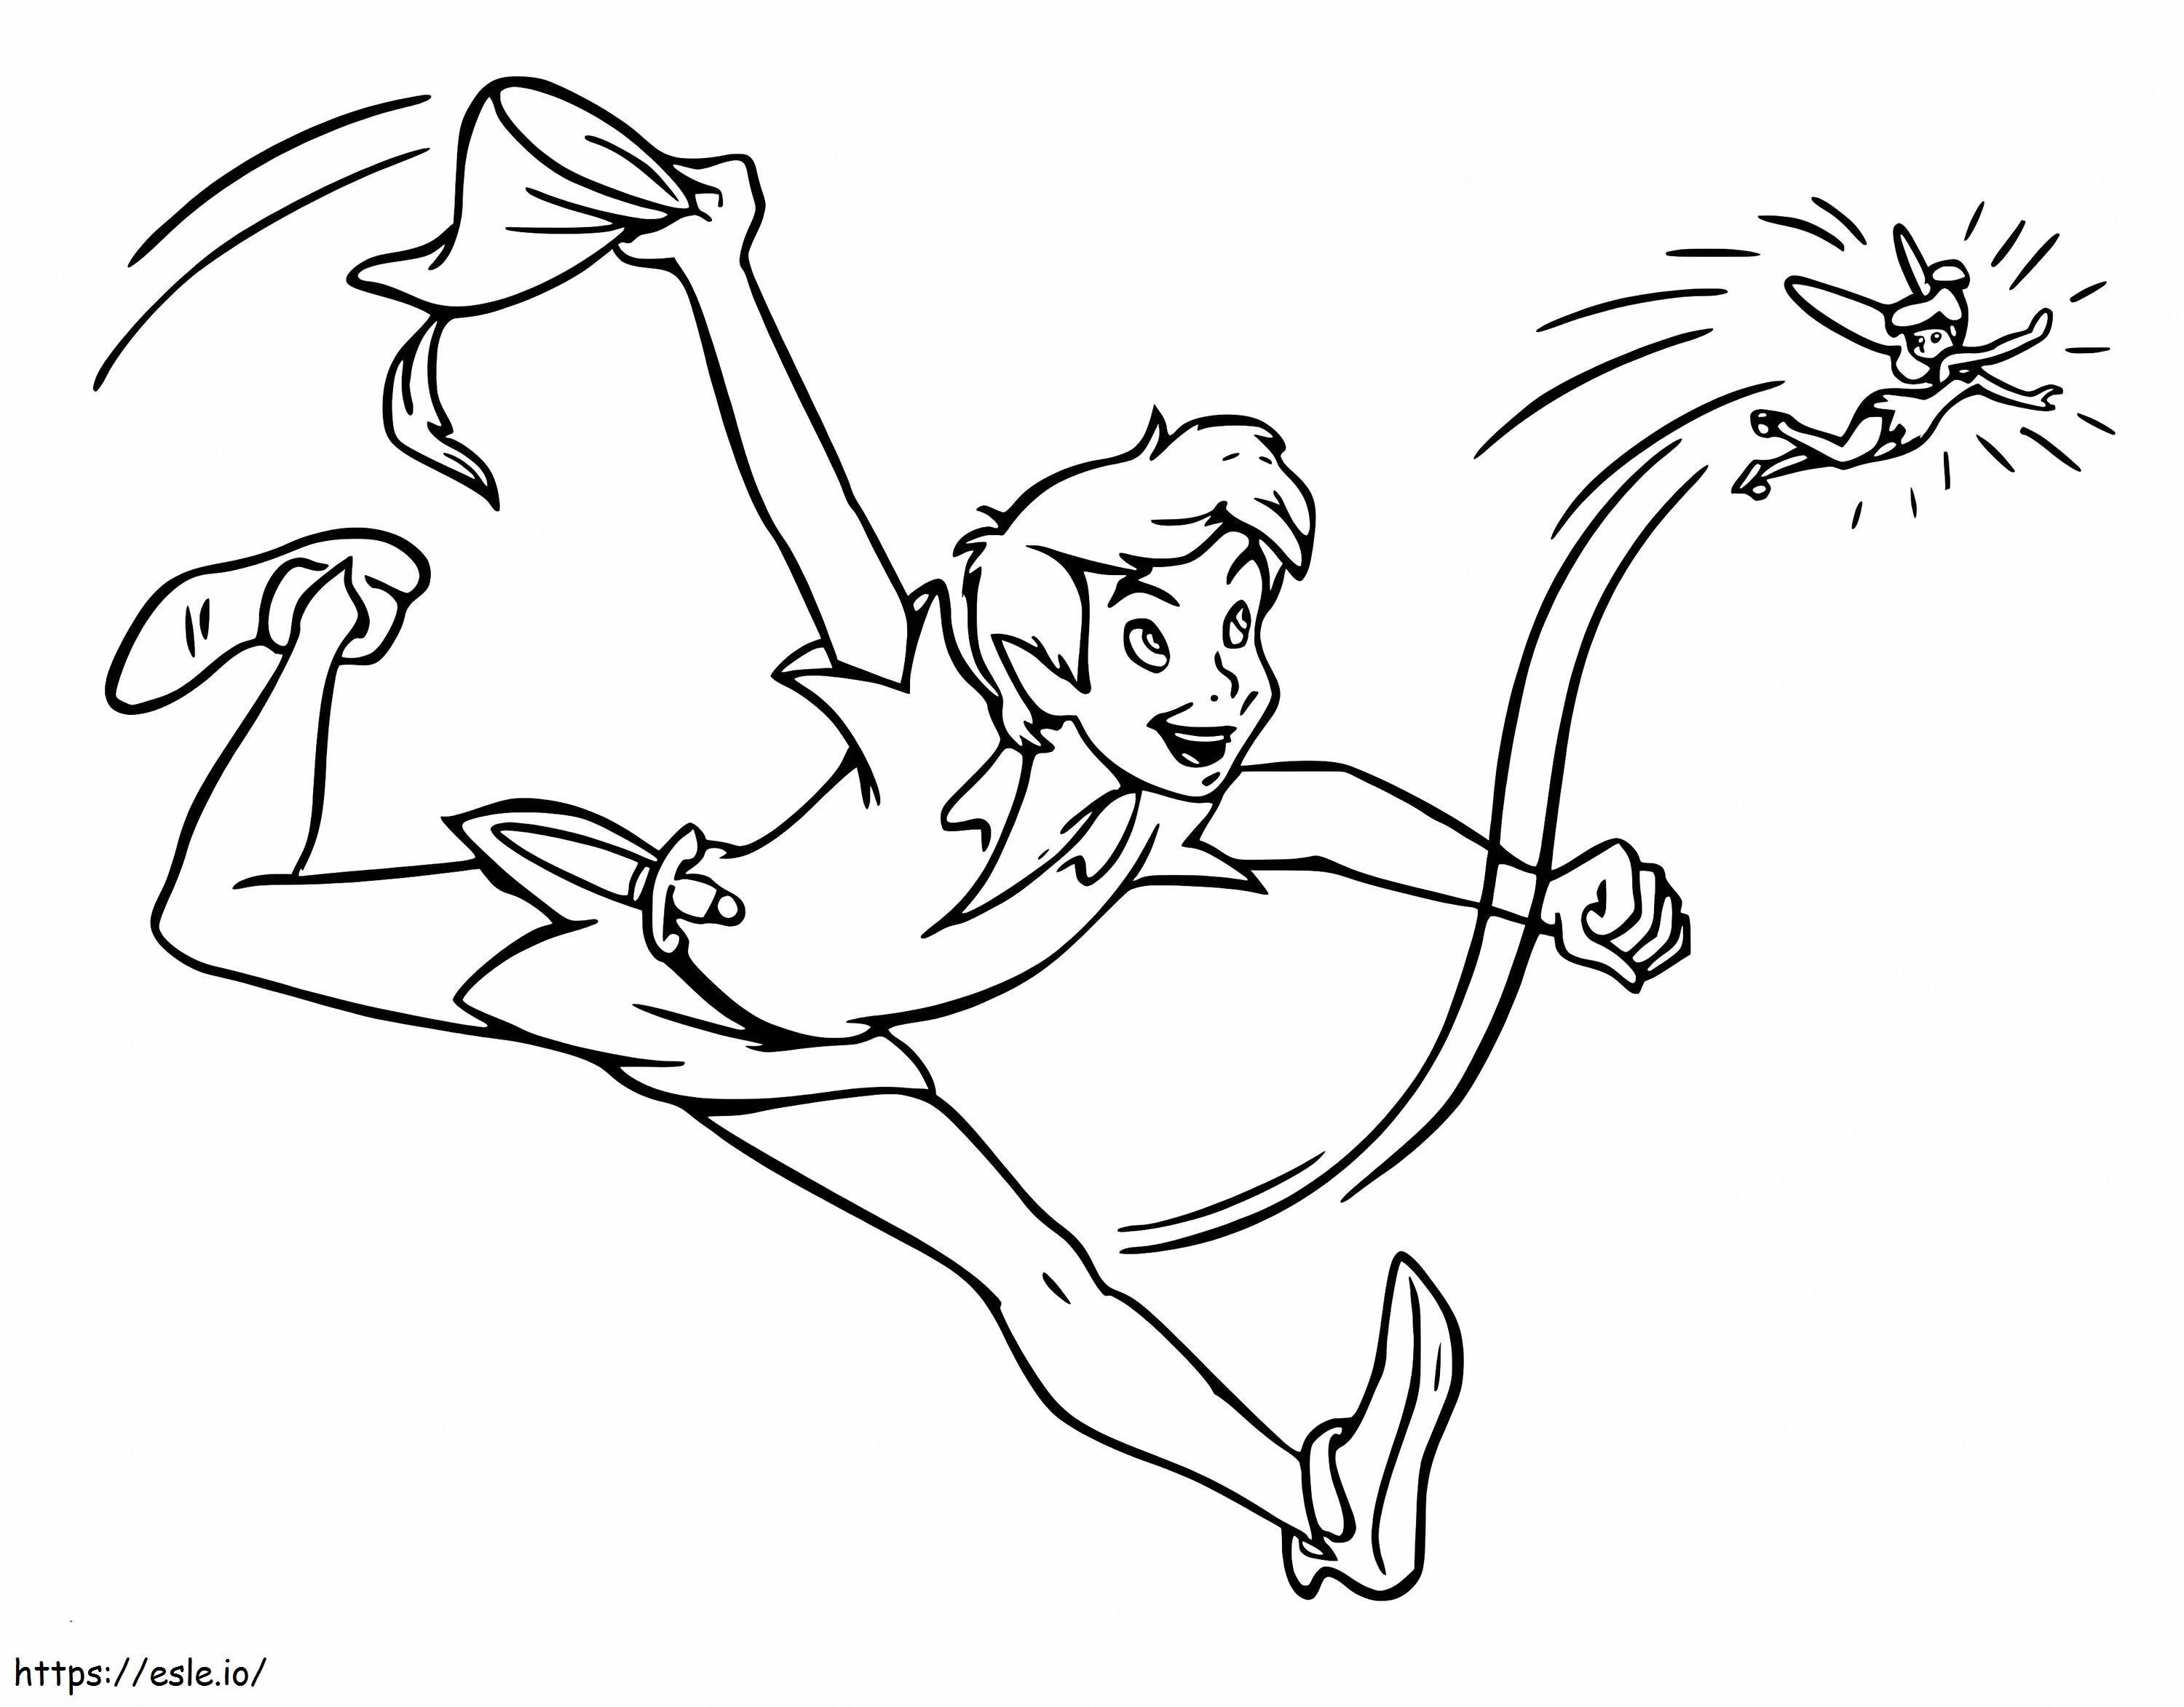 Peter Pan und Tinkerbell ausmalbilder